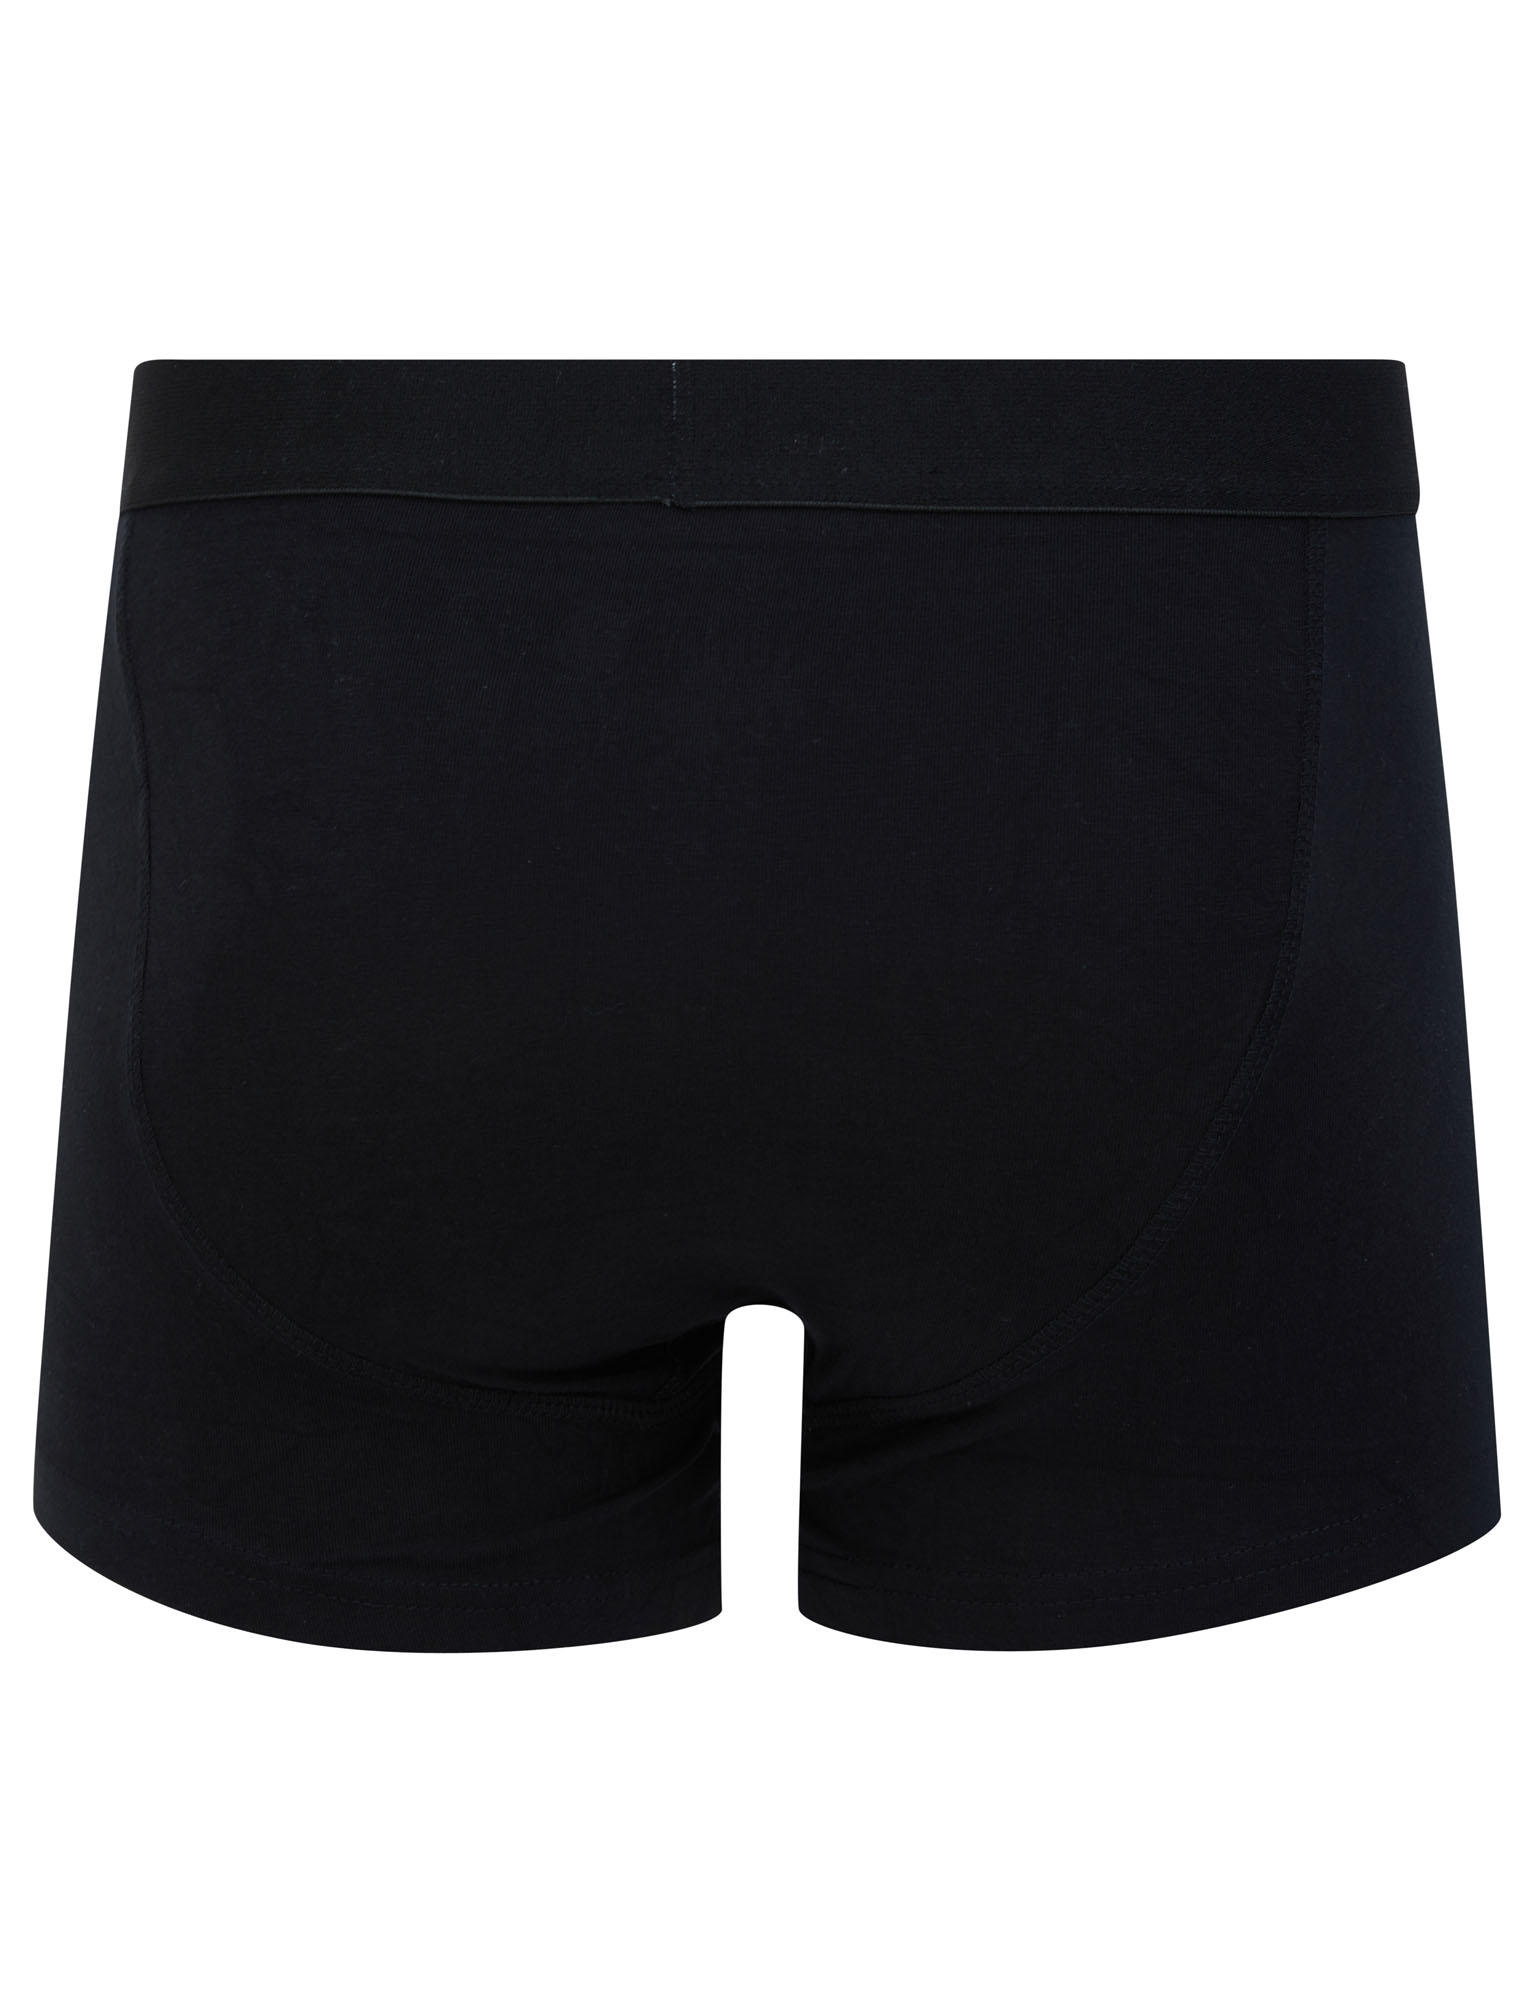 Mens Boxer Shorts 5 Pack Tokyo Laundry Multipack Underwear Trunks ...